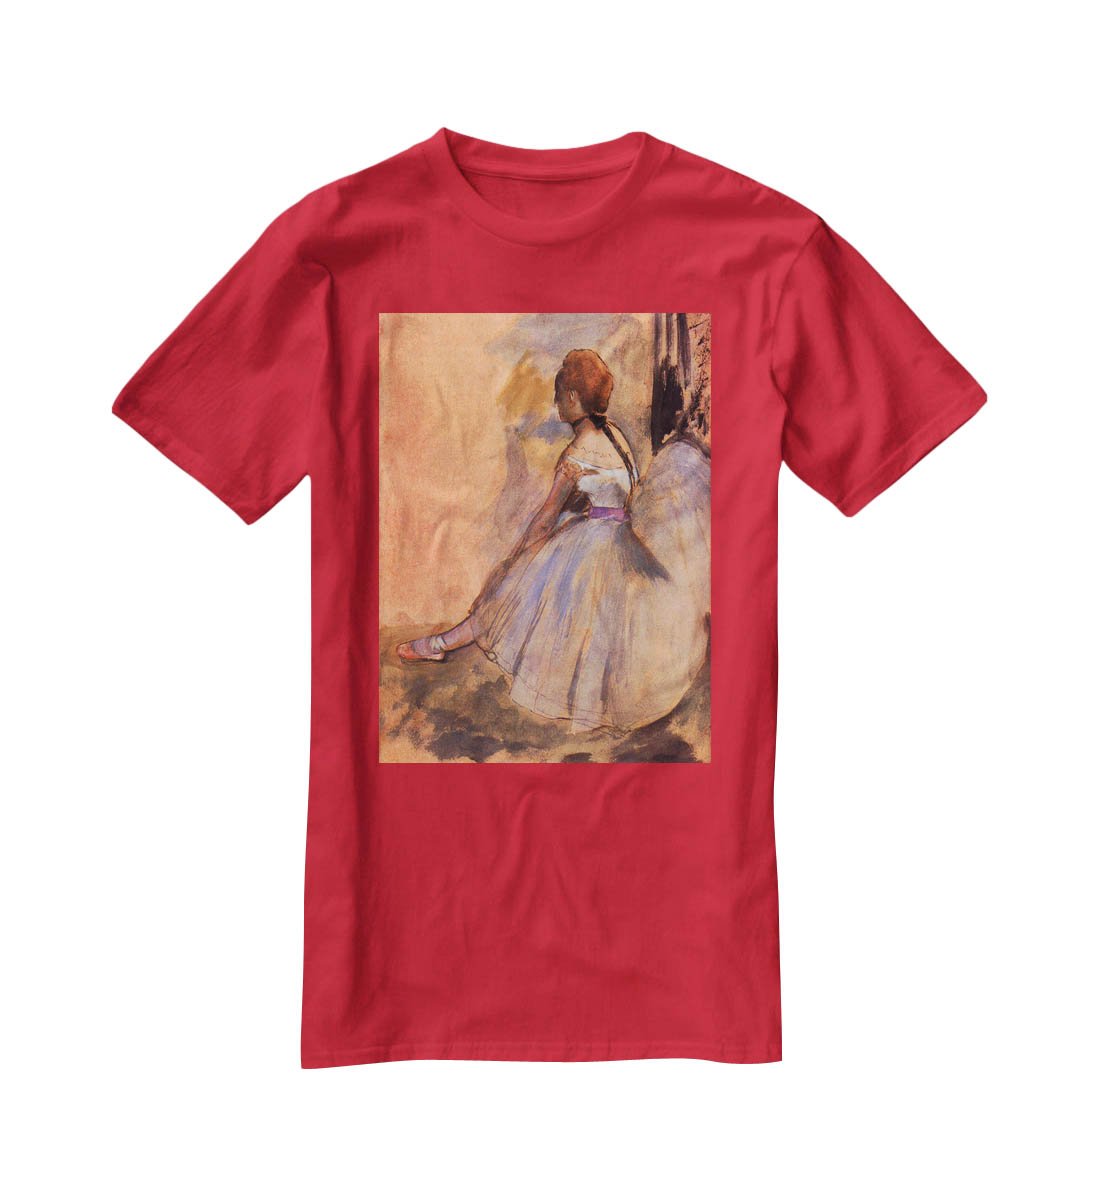 Sitting dancer with extended left leg by Degas T-Shirt - Canvas Art Rocks - 4